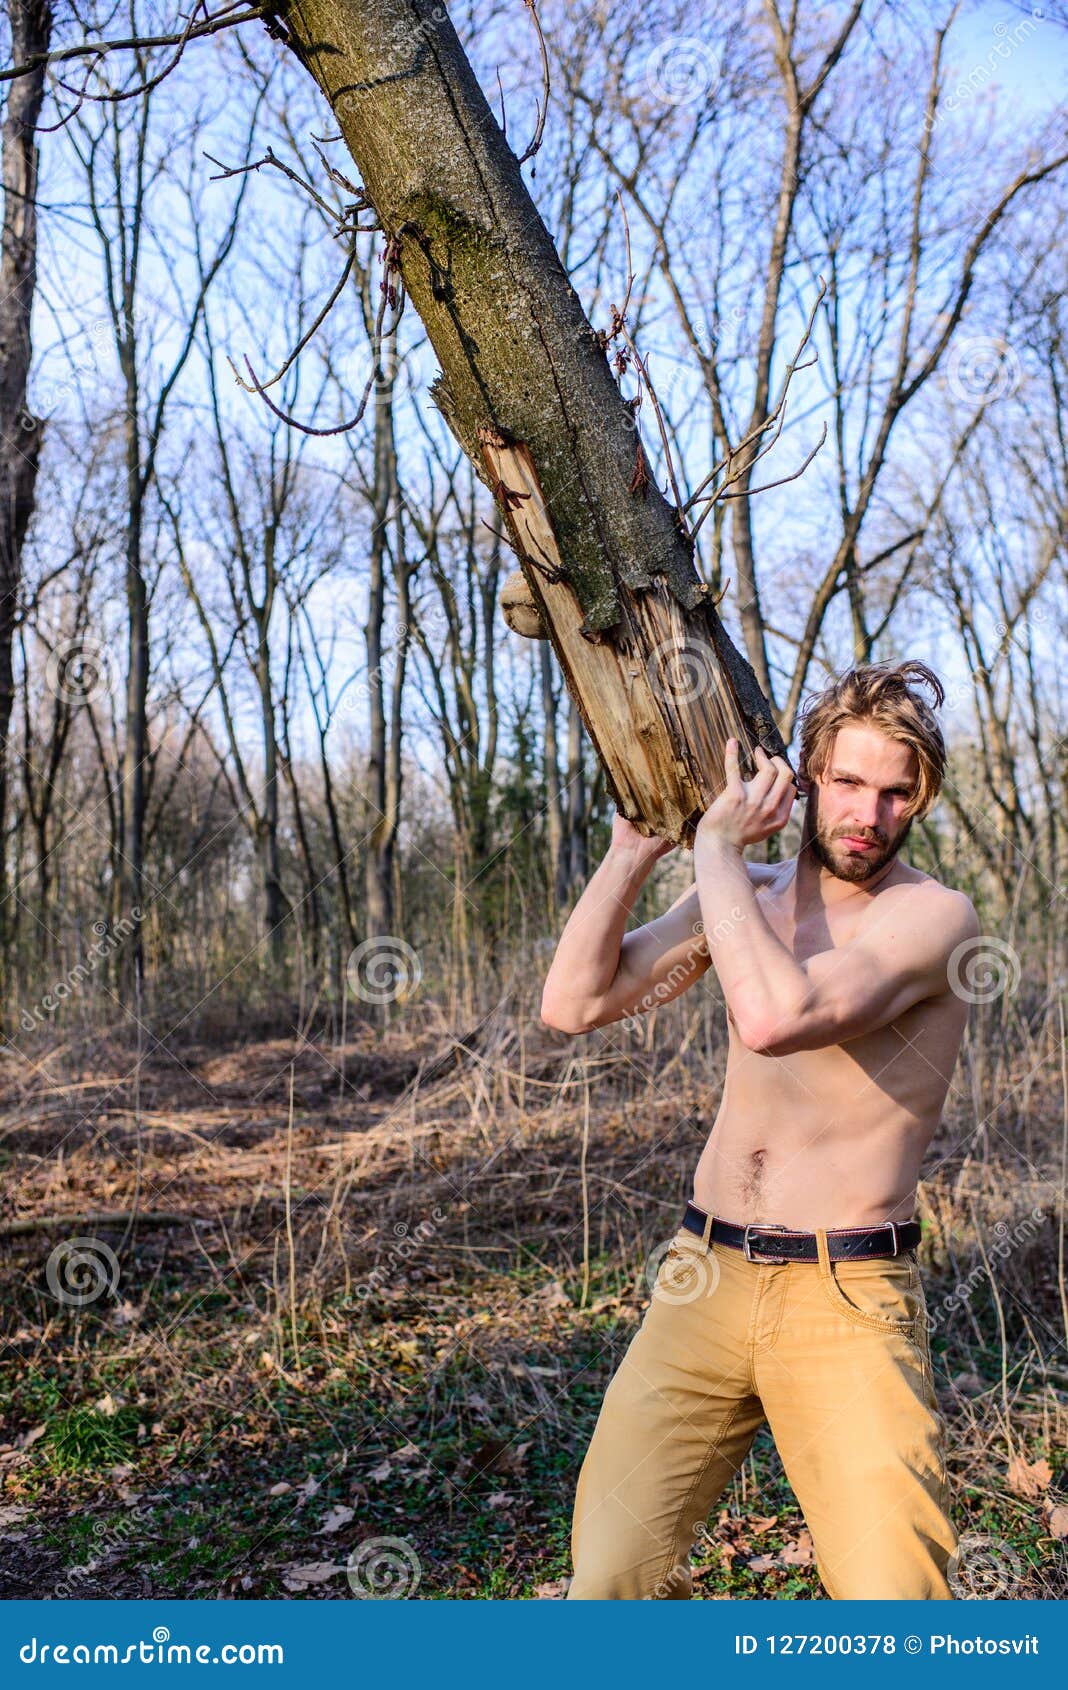 133 Lumberjack Naked Stock Photos - Free & Royalty-Free Stock Photos from  Dreamstime